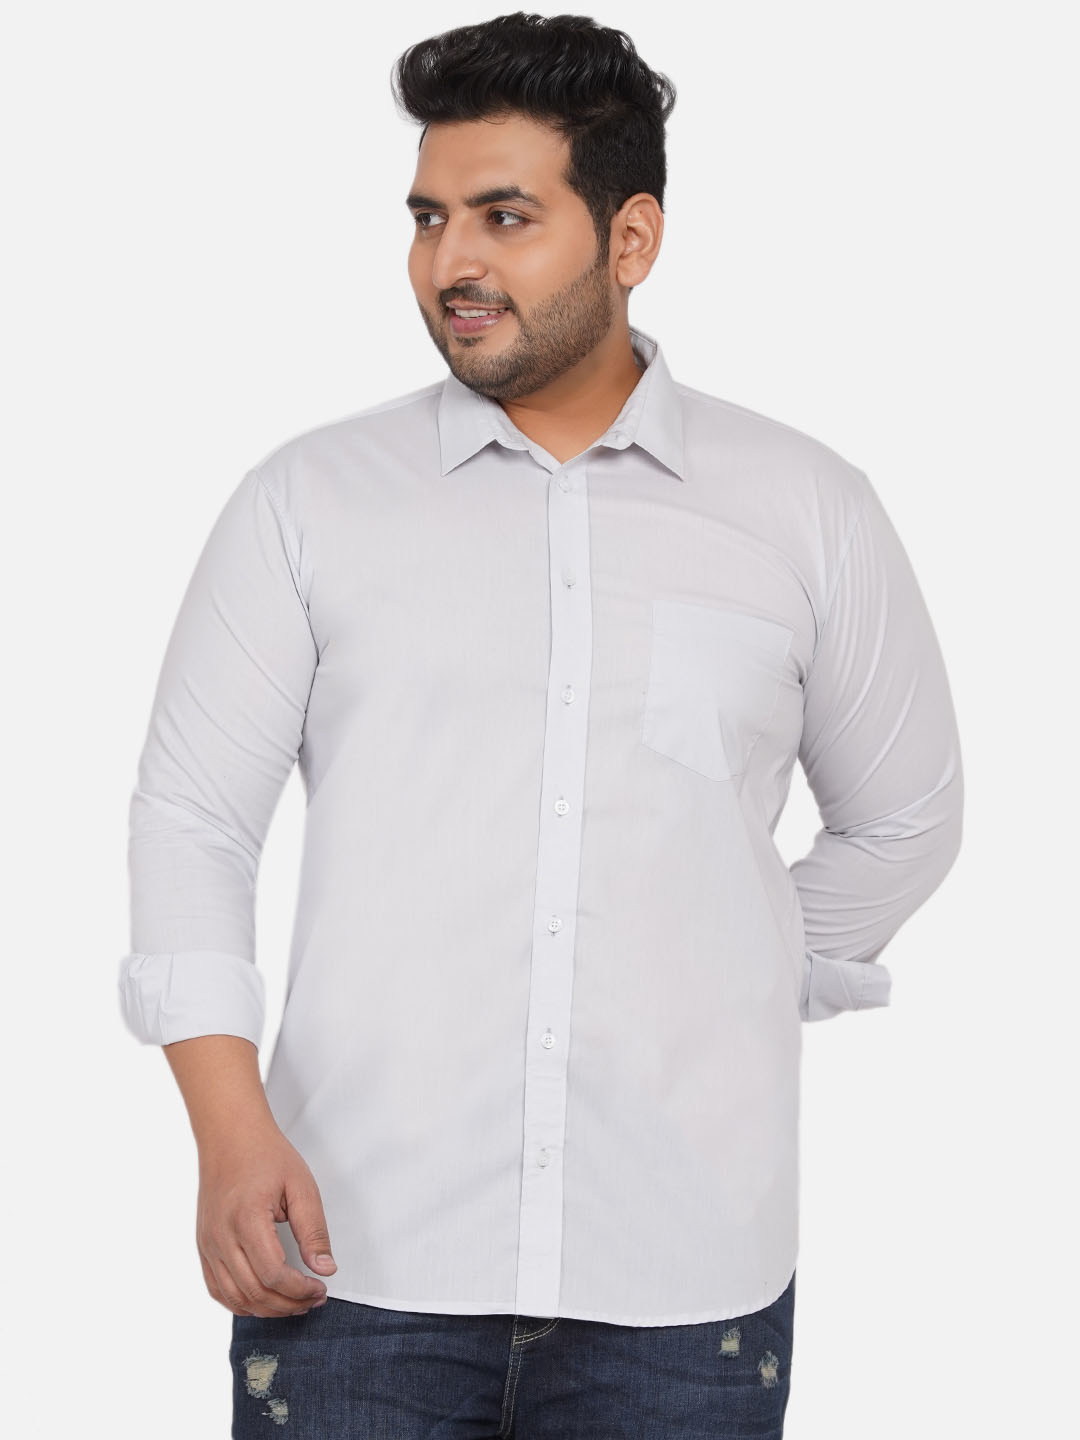 Essential White Stretchable Shirt